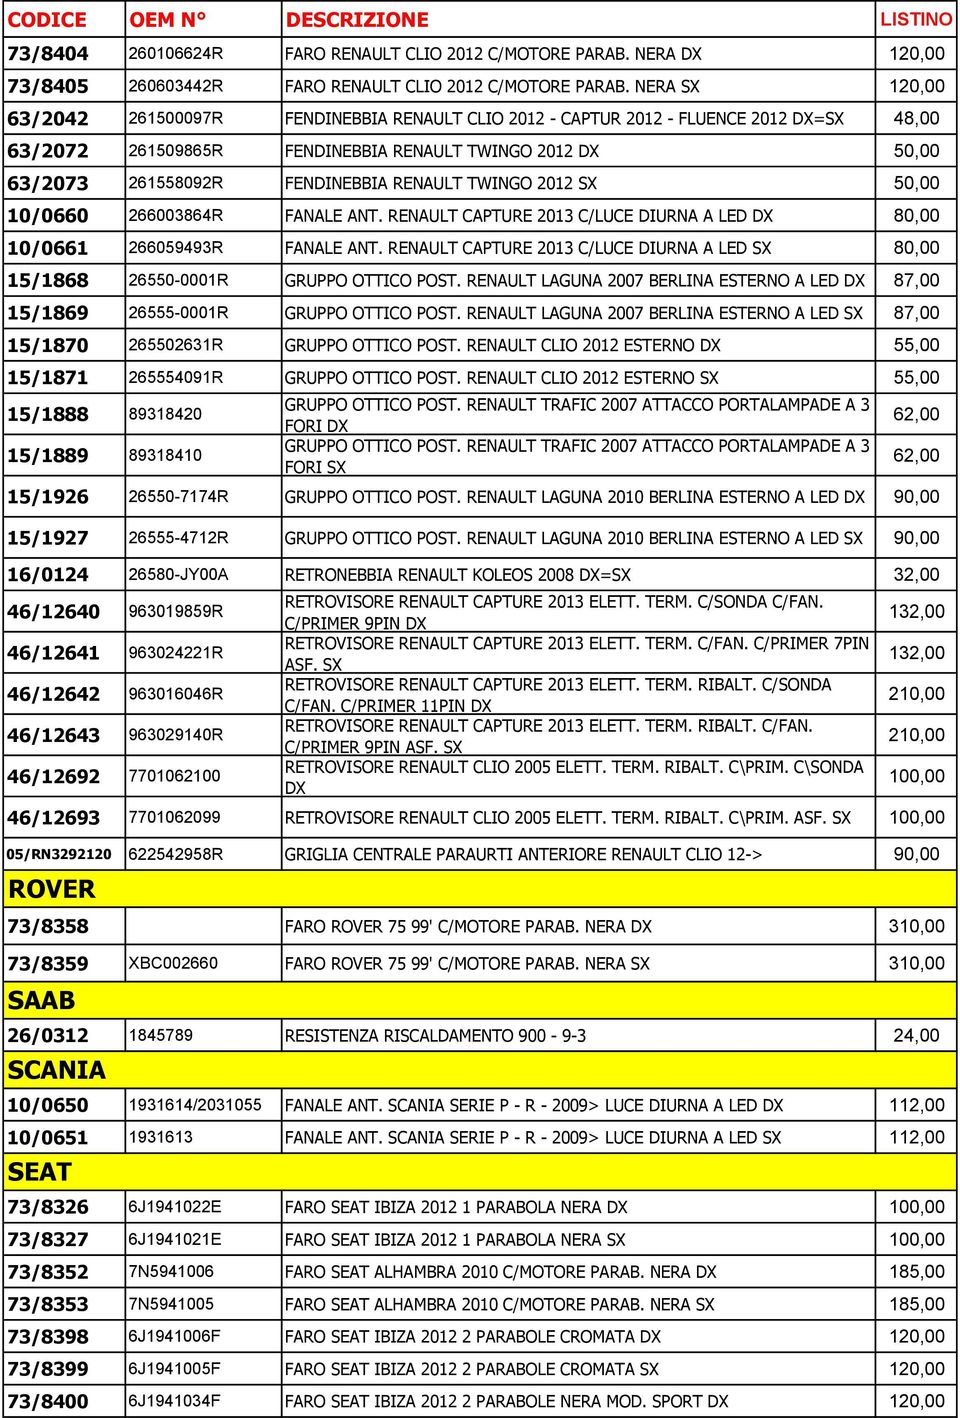 RENAULT TWINGO 2012 SX 50,00 10/0660 266003864R FANALE ANT. RENAULT CAPTURE 2013 C/LUCE DIURNA A LED DX 80,00 10/0661 266059493R FANALE ANT.